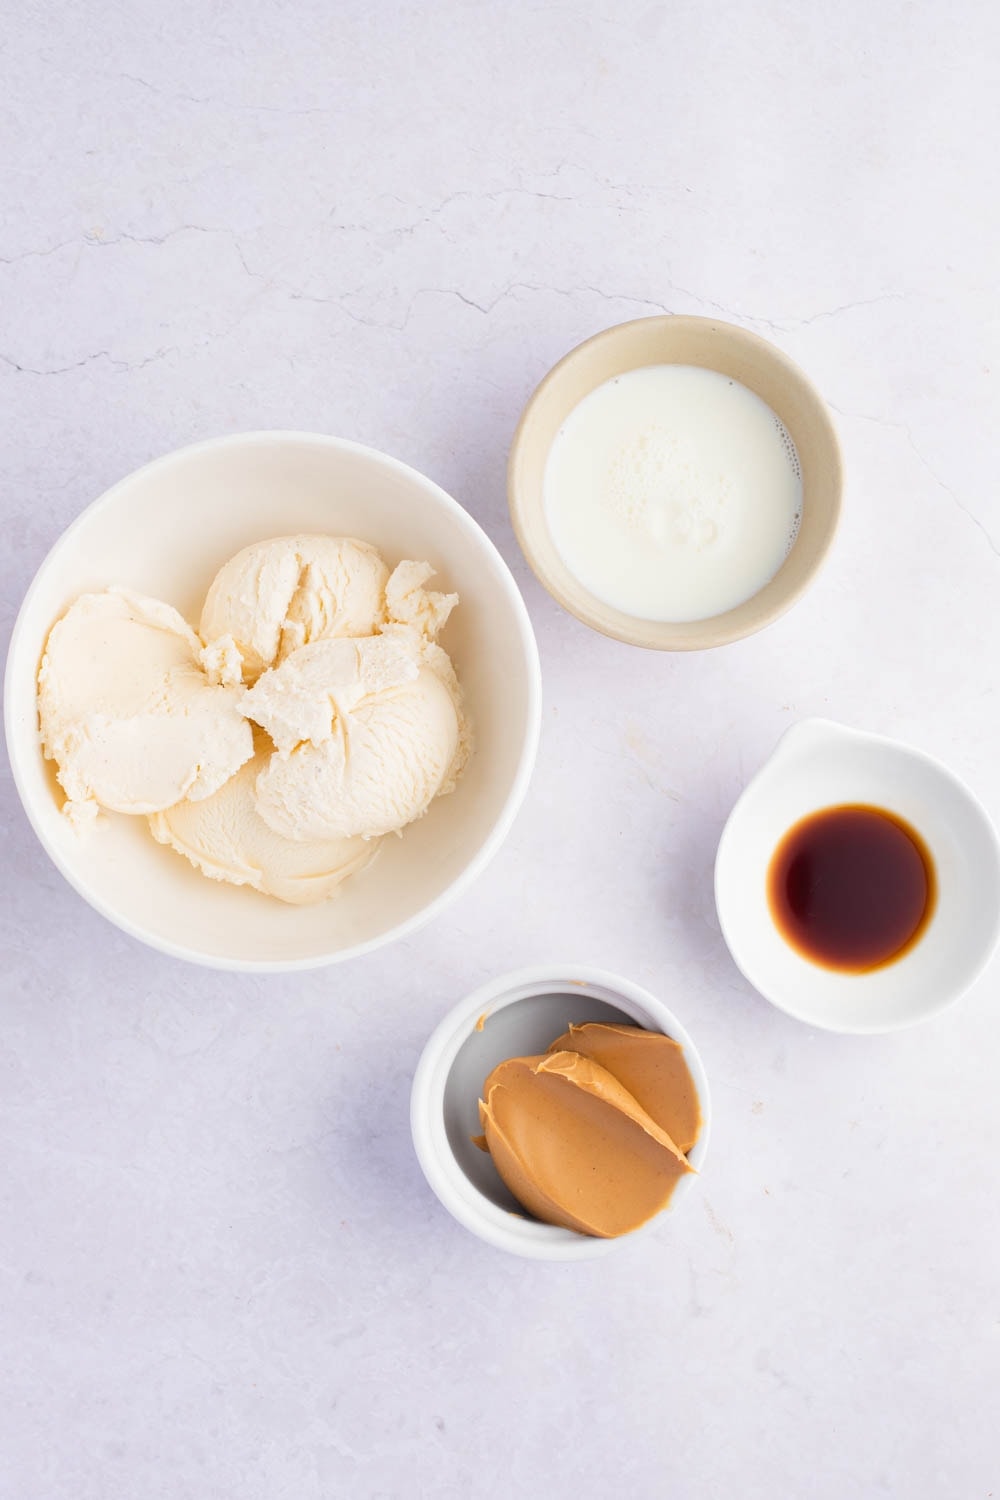 Peanut Butter Milkshake Ingredients - Vanilla Ice Cream, Milk, Peanut Butter and Vanilla Extract